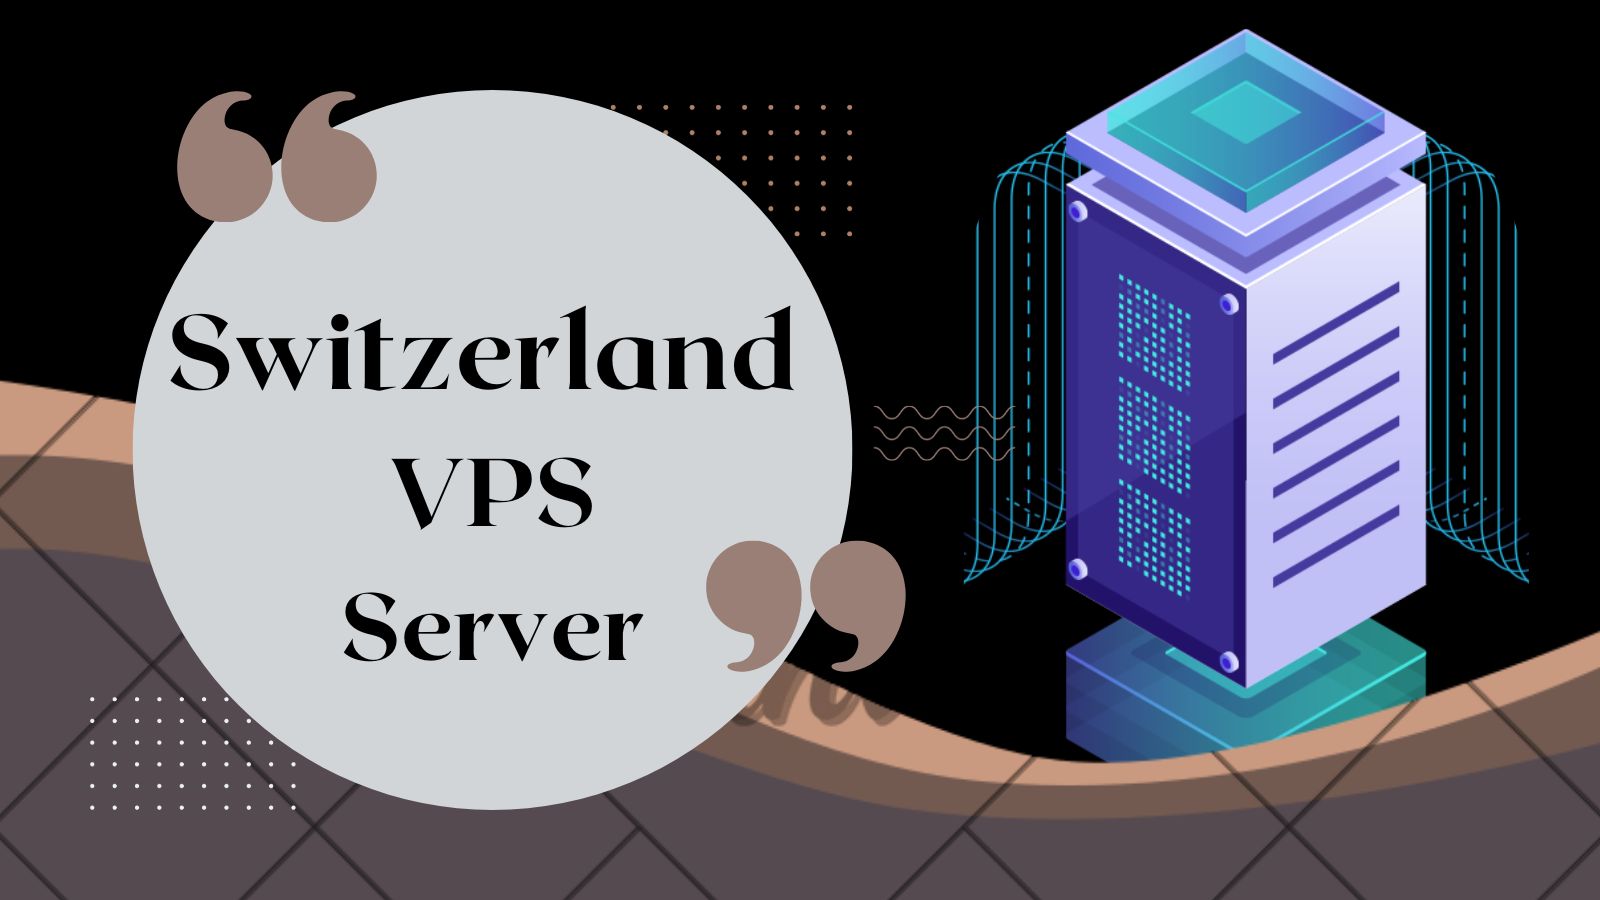 switzerland dedicated server